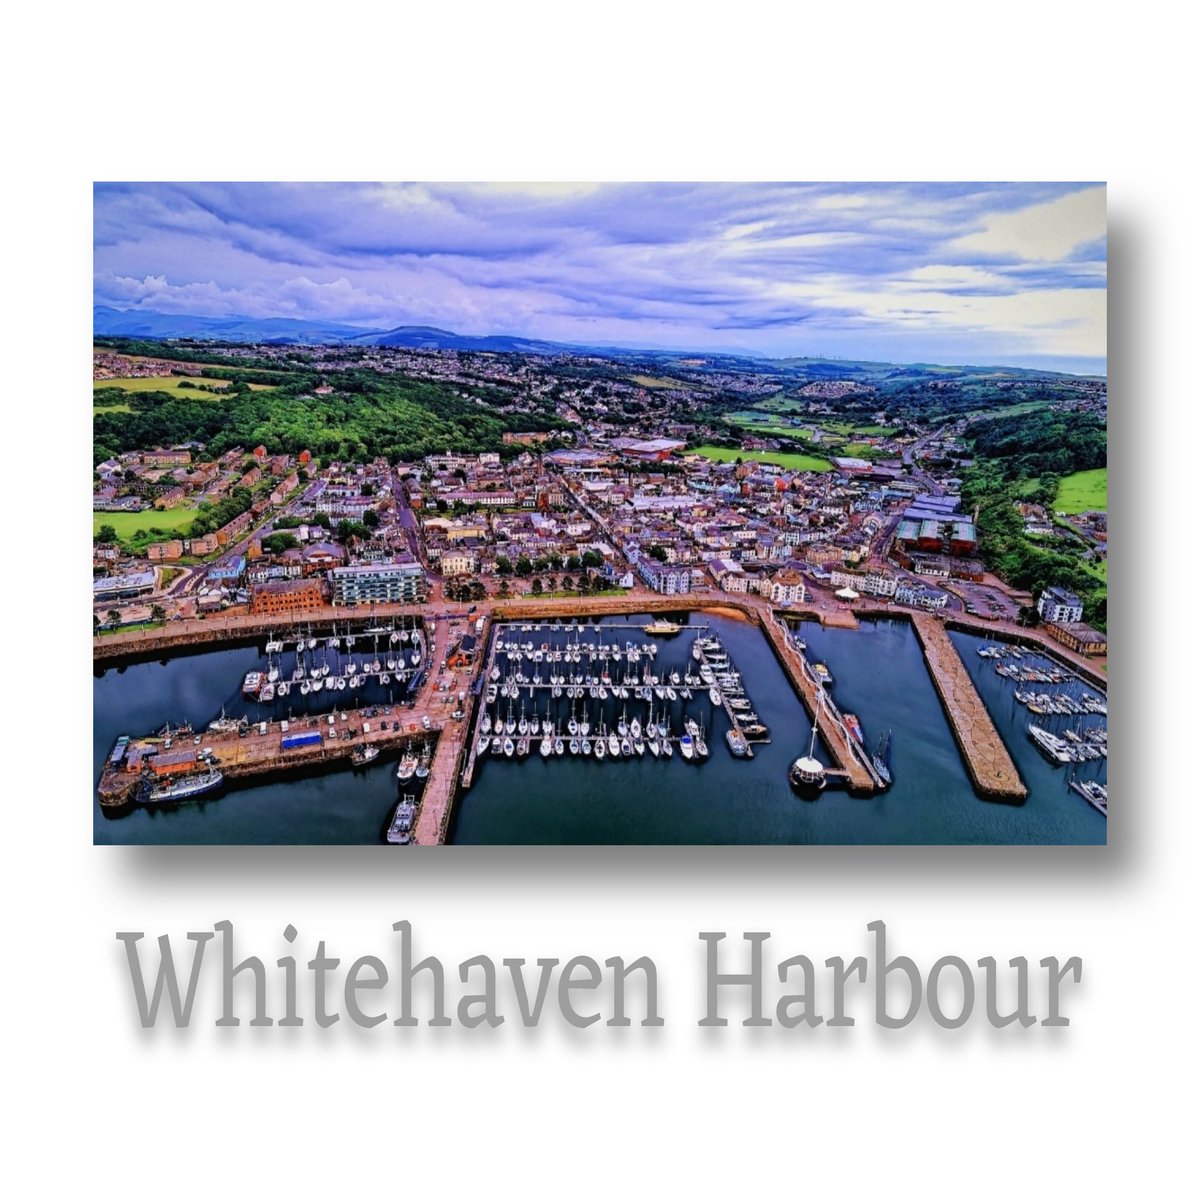 Whitehaven Harbour 👍  #drone #photography #photooftheday #aerialphoto